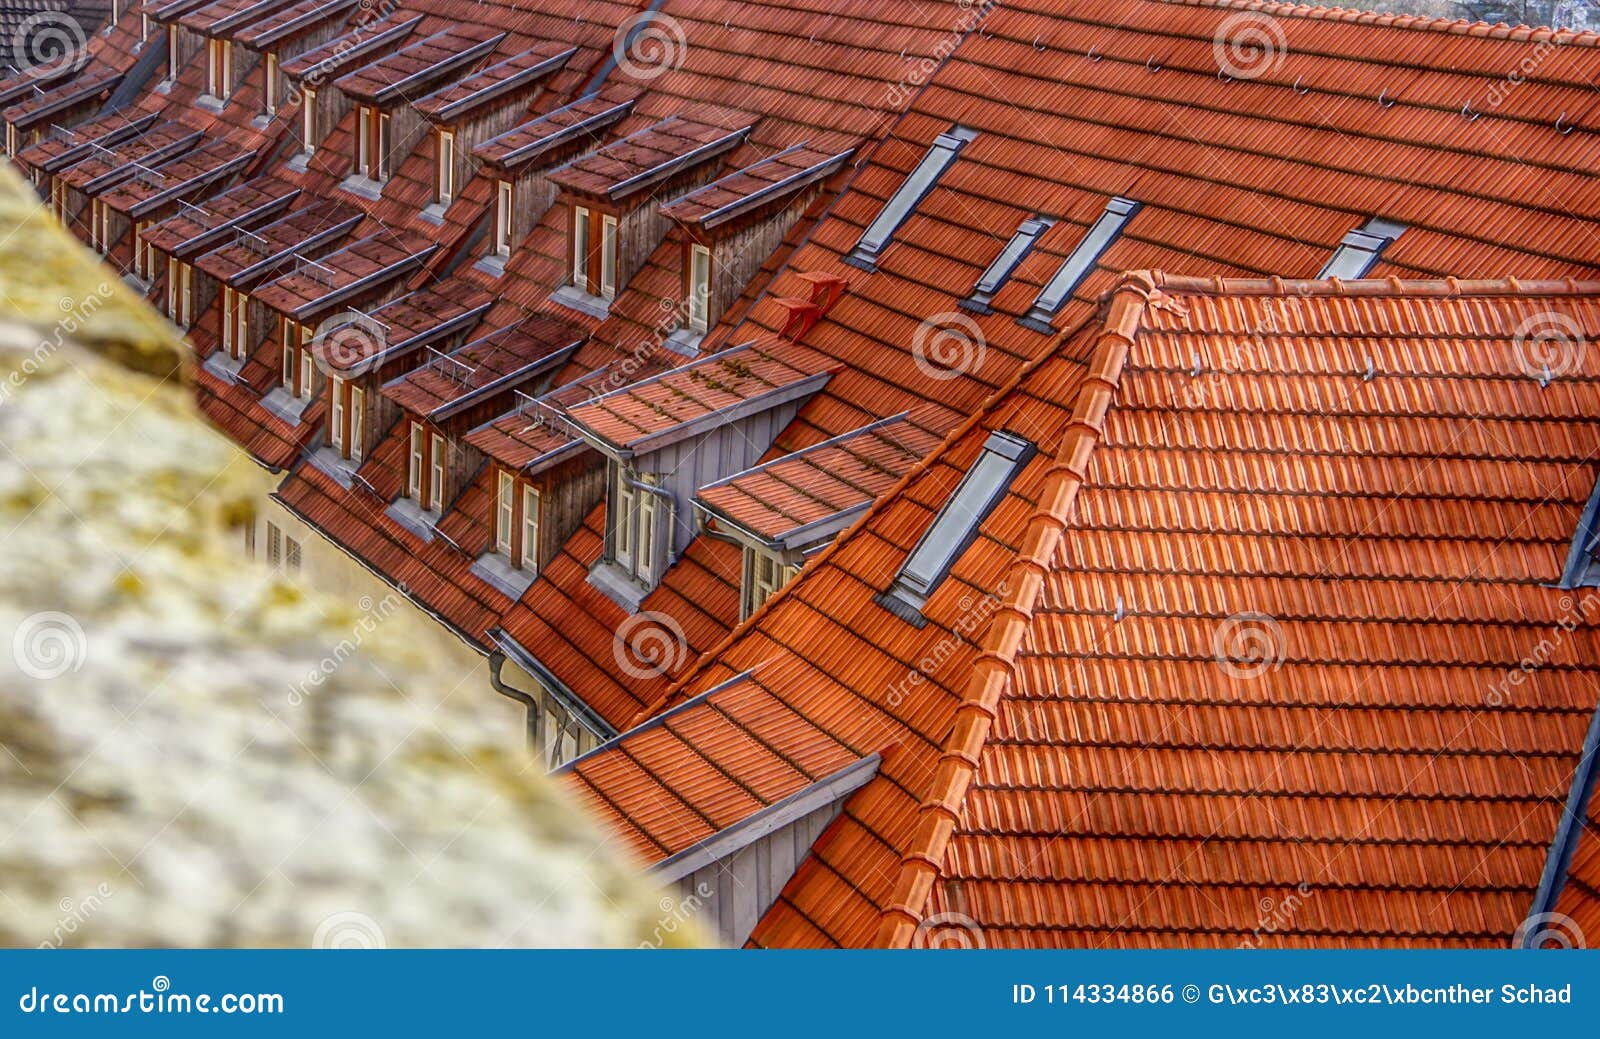 brick roof with dormer windows